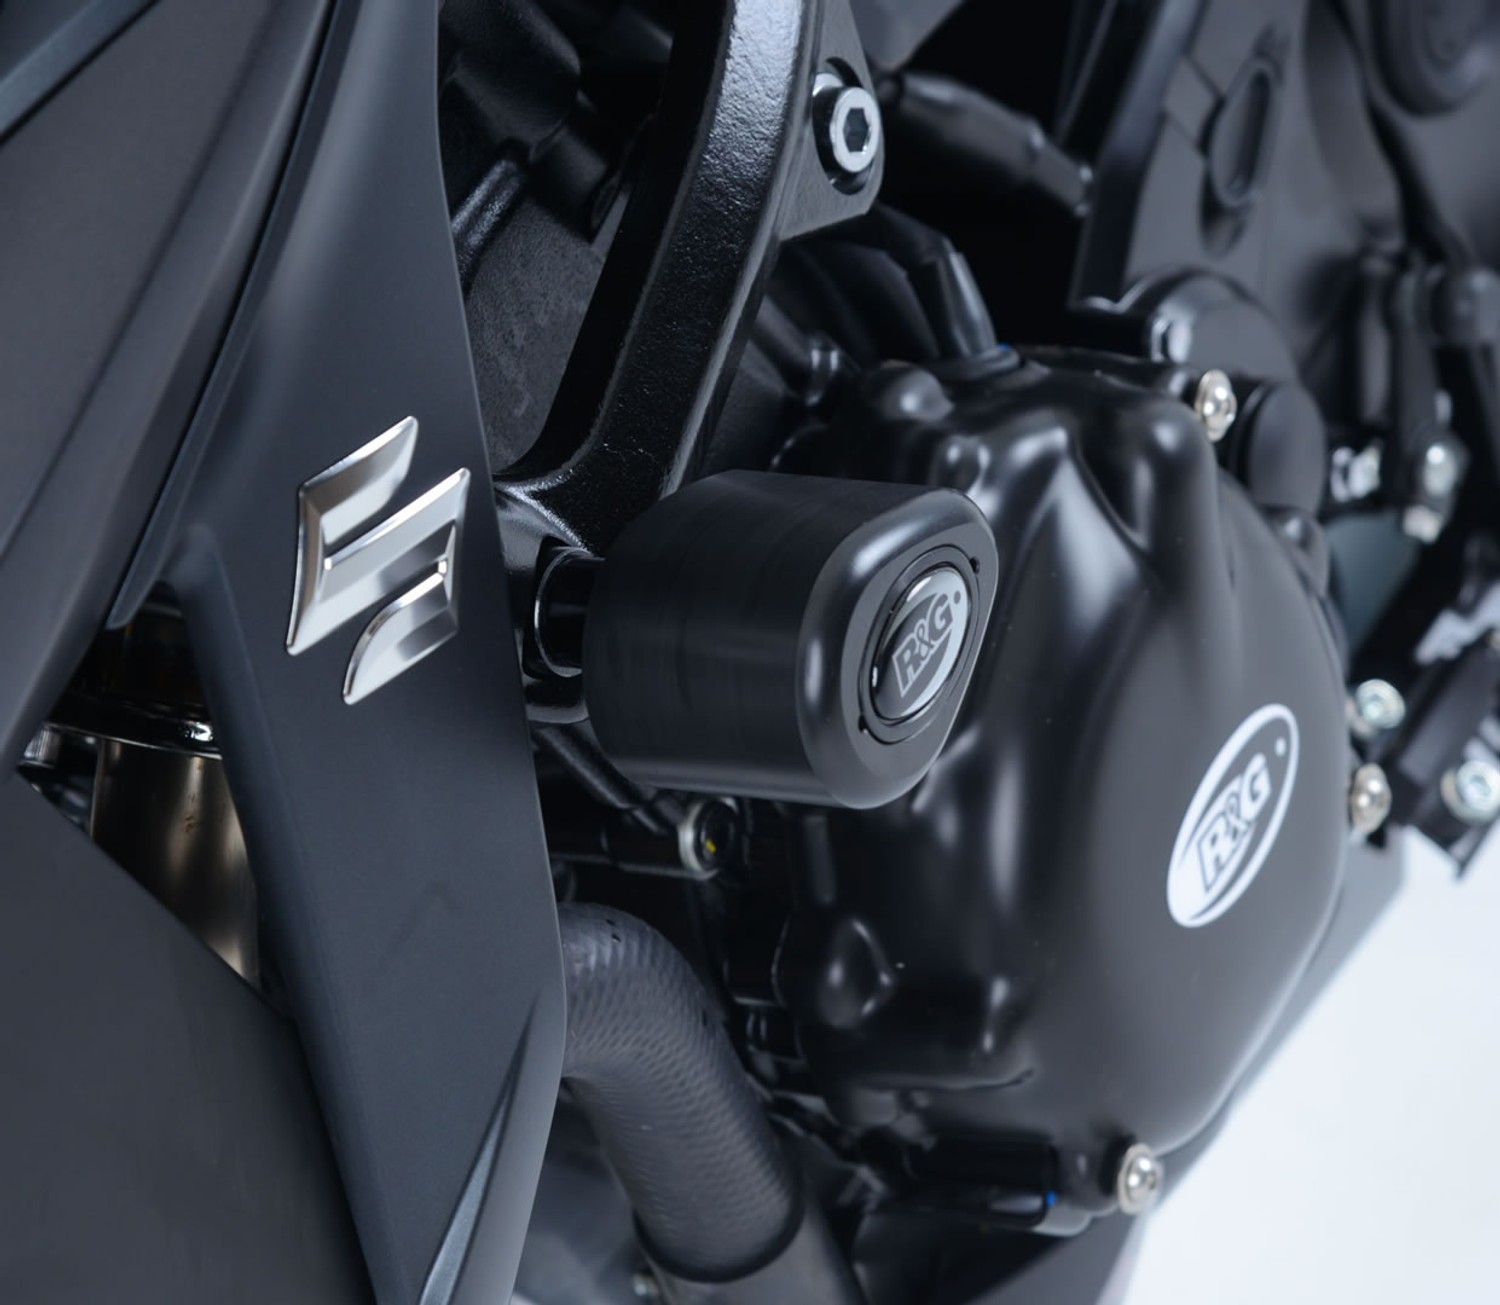 Tampons de protection R&G RACING Aero noir Suzuki GSX-S750 NEUF